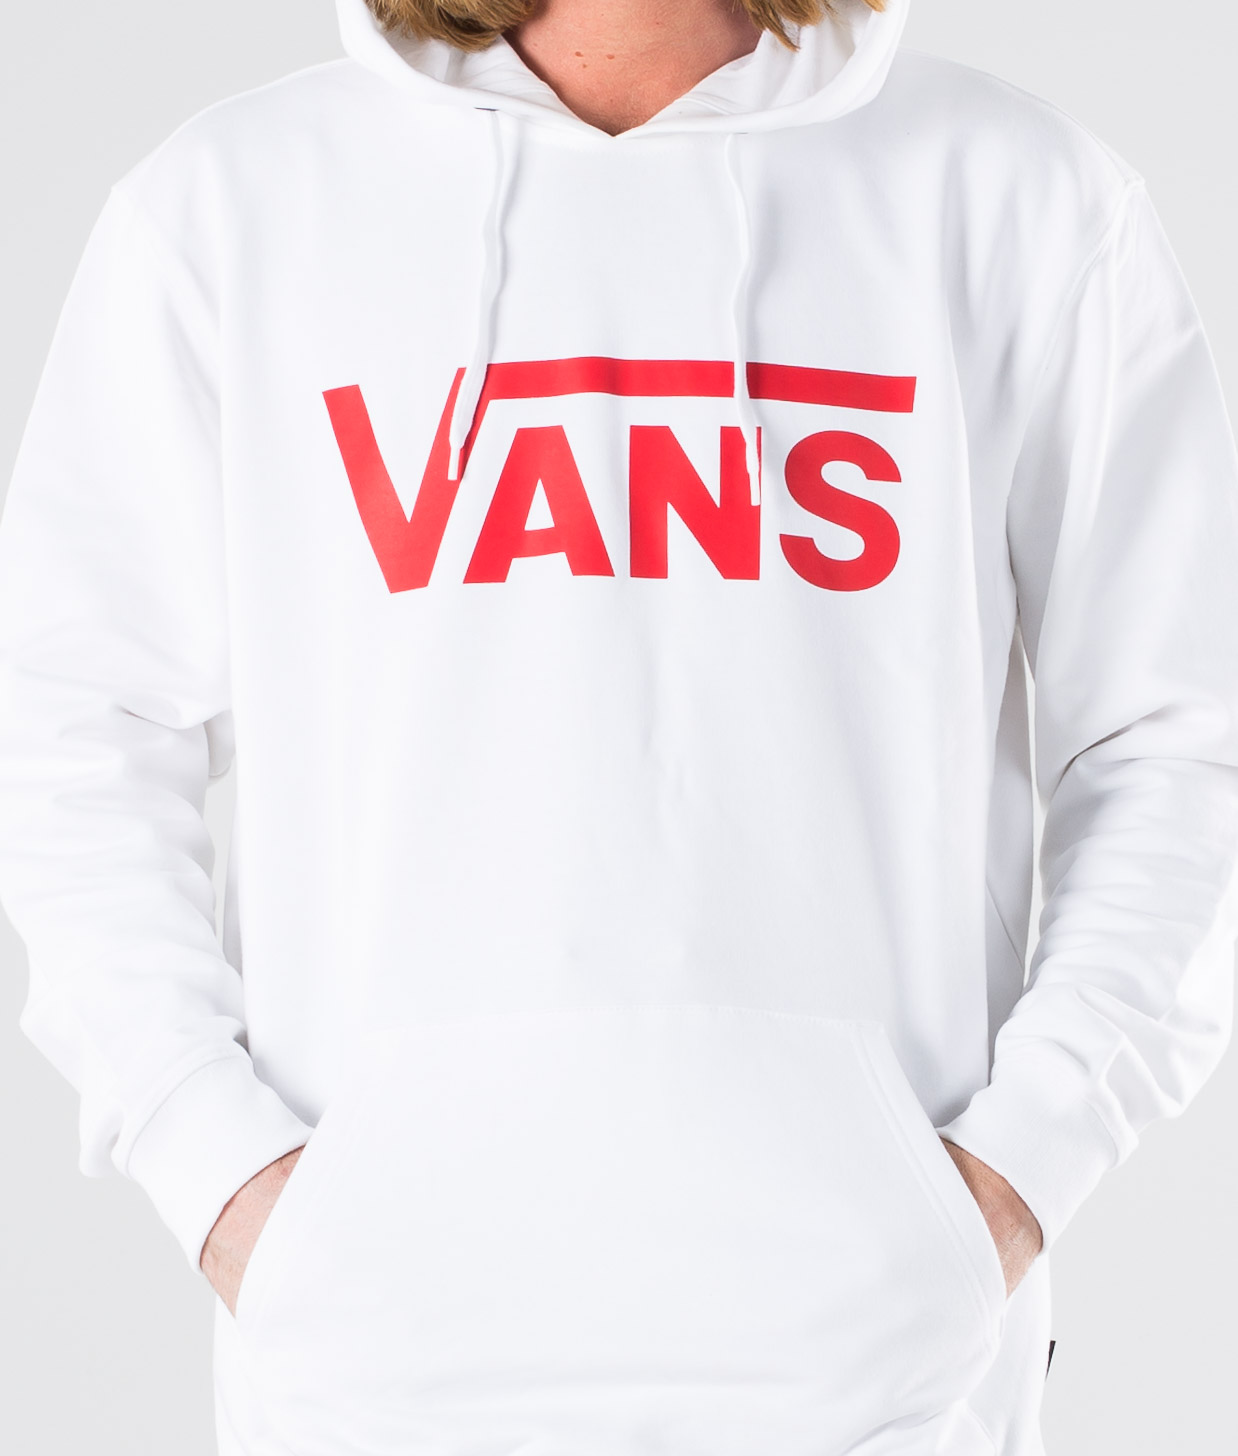 vans white and red hoodie